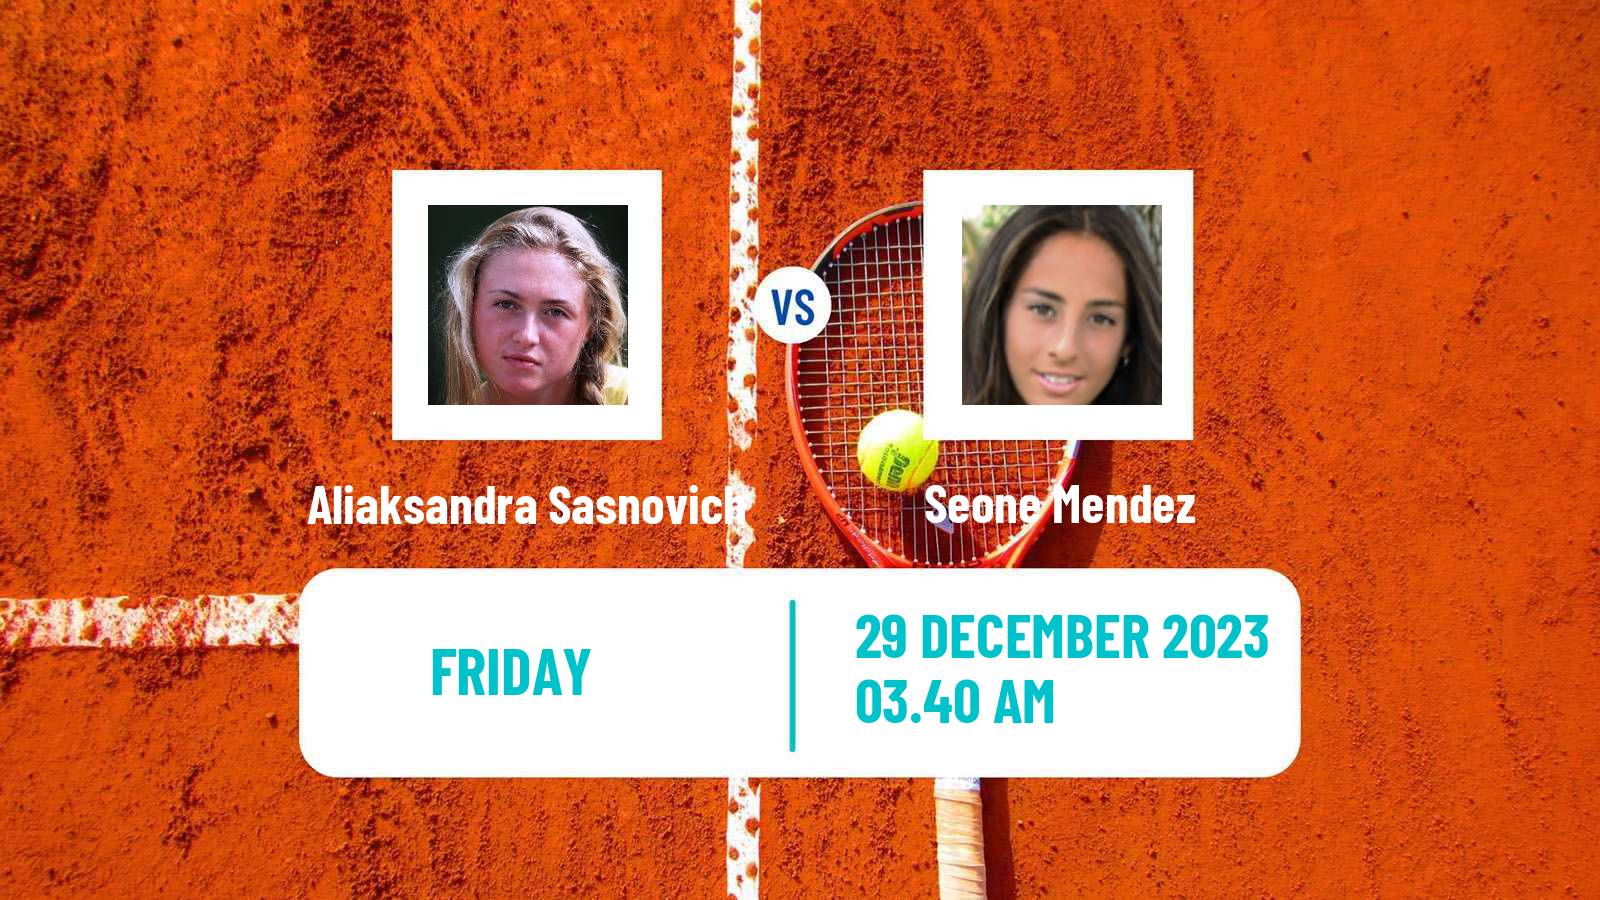 Tennis WTA Brisbane Aliaksandra Sasnovich - Seone Mendez